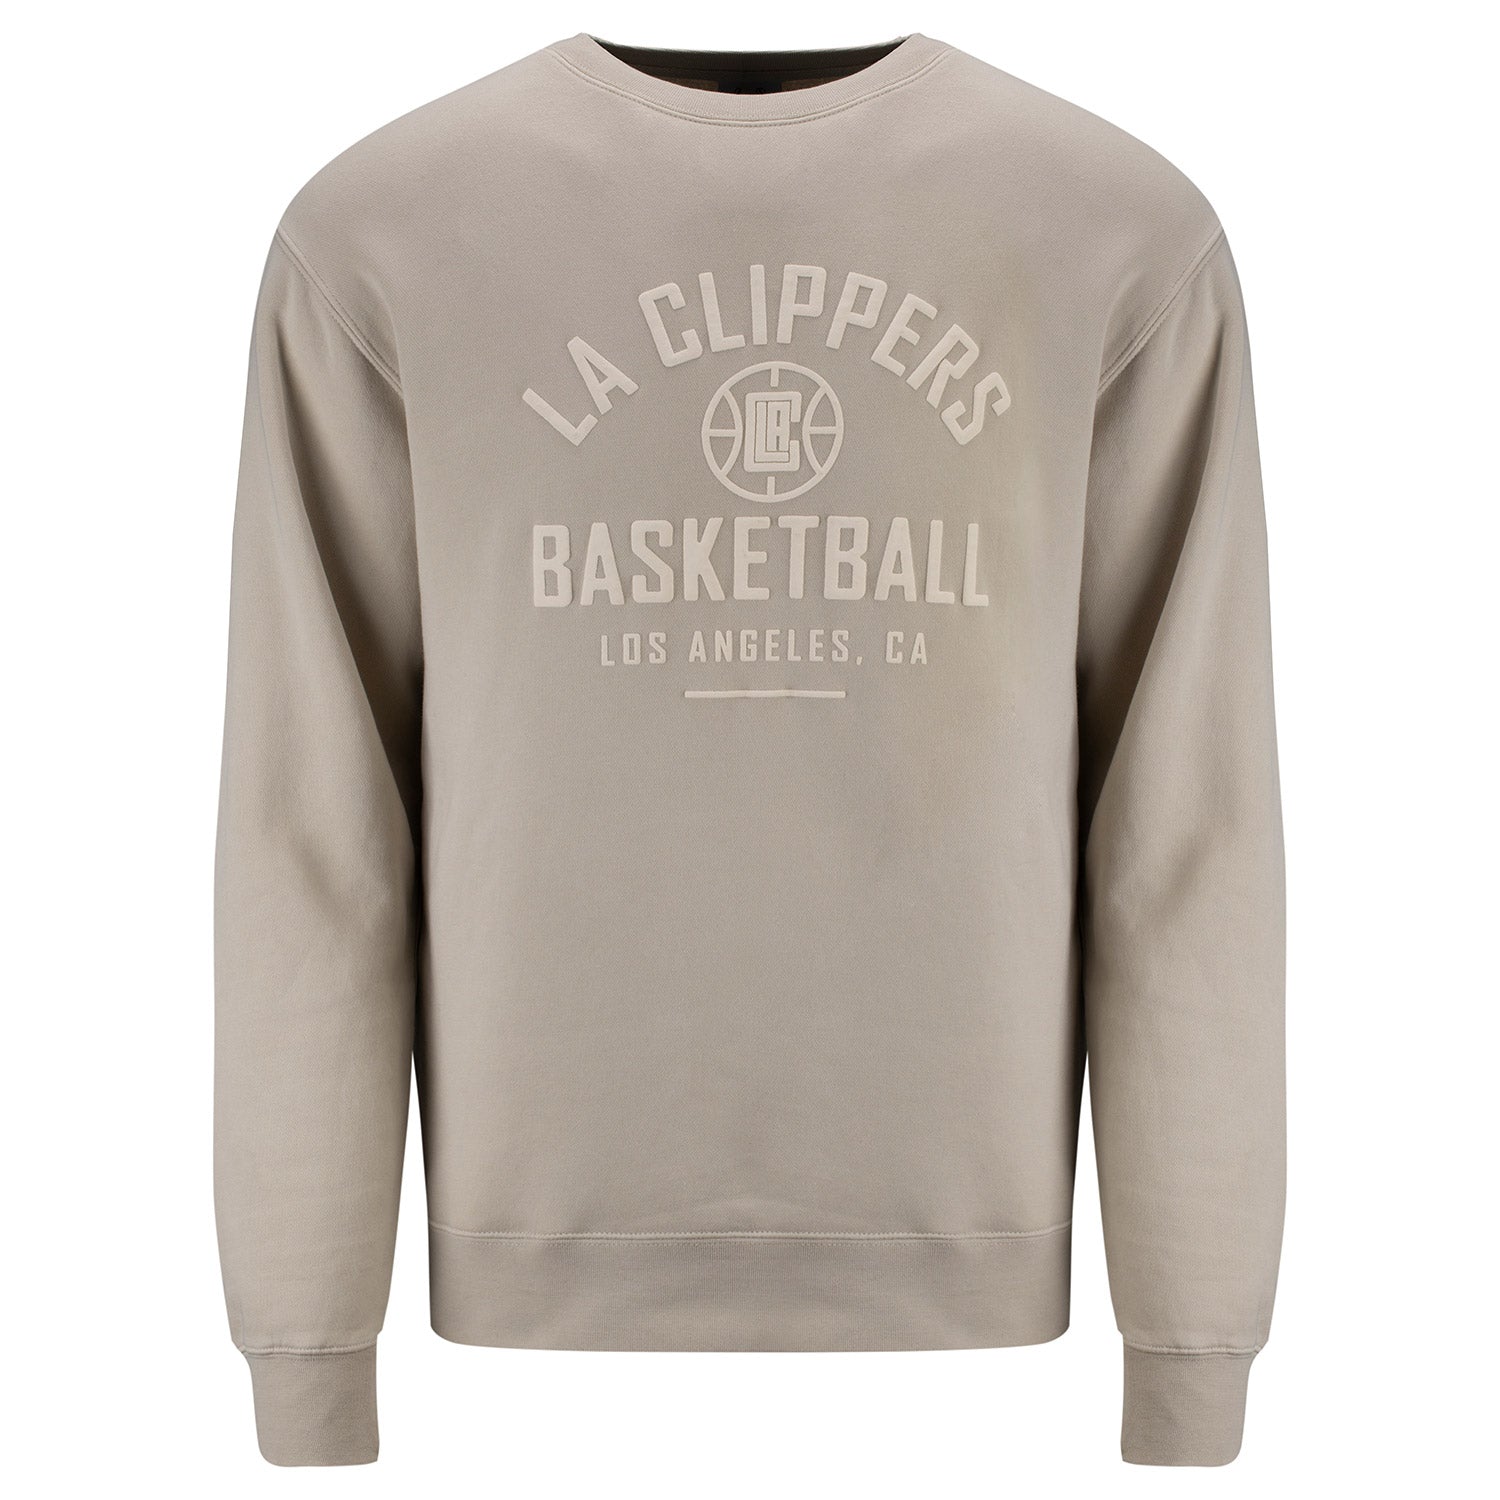 Lab Collection La Clippers La Clippers Basketball Vintage Ivory Tonal Crewneck Sweatshirt